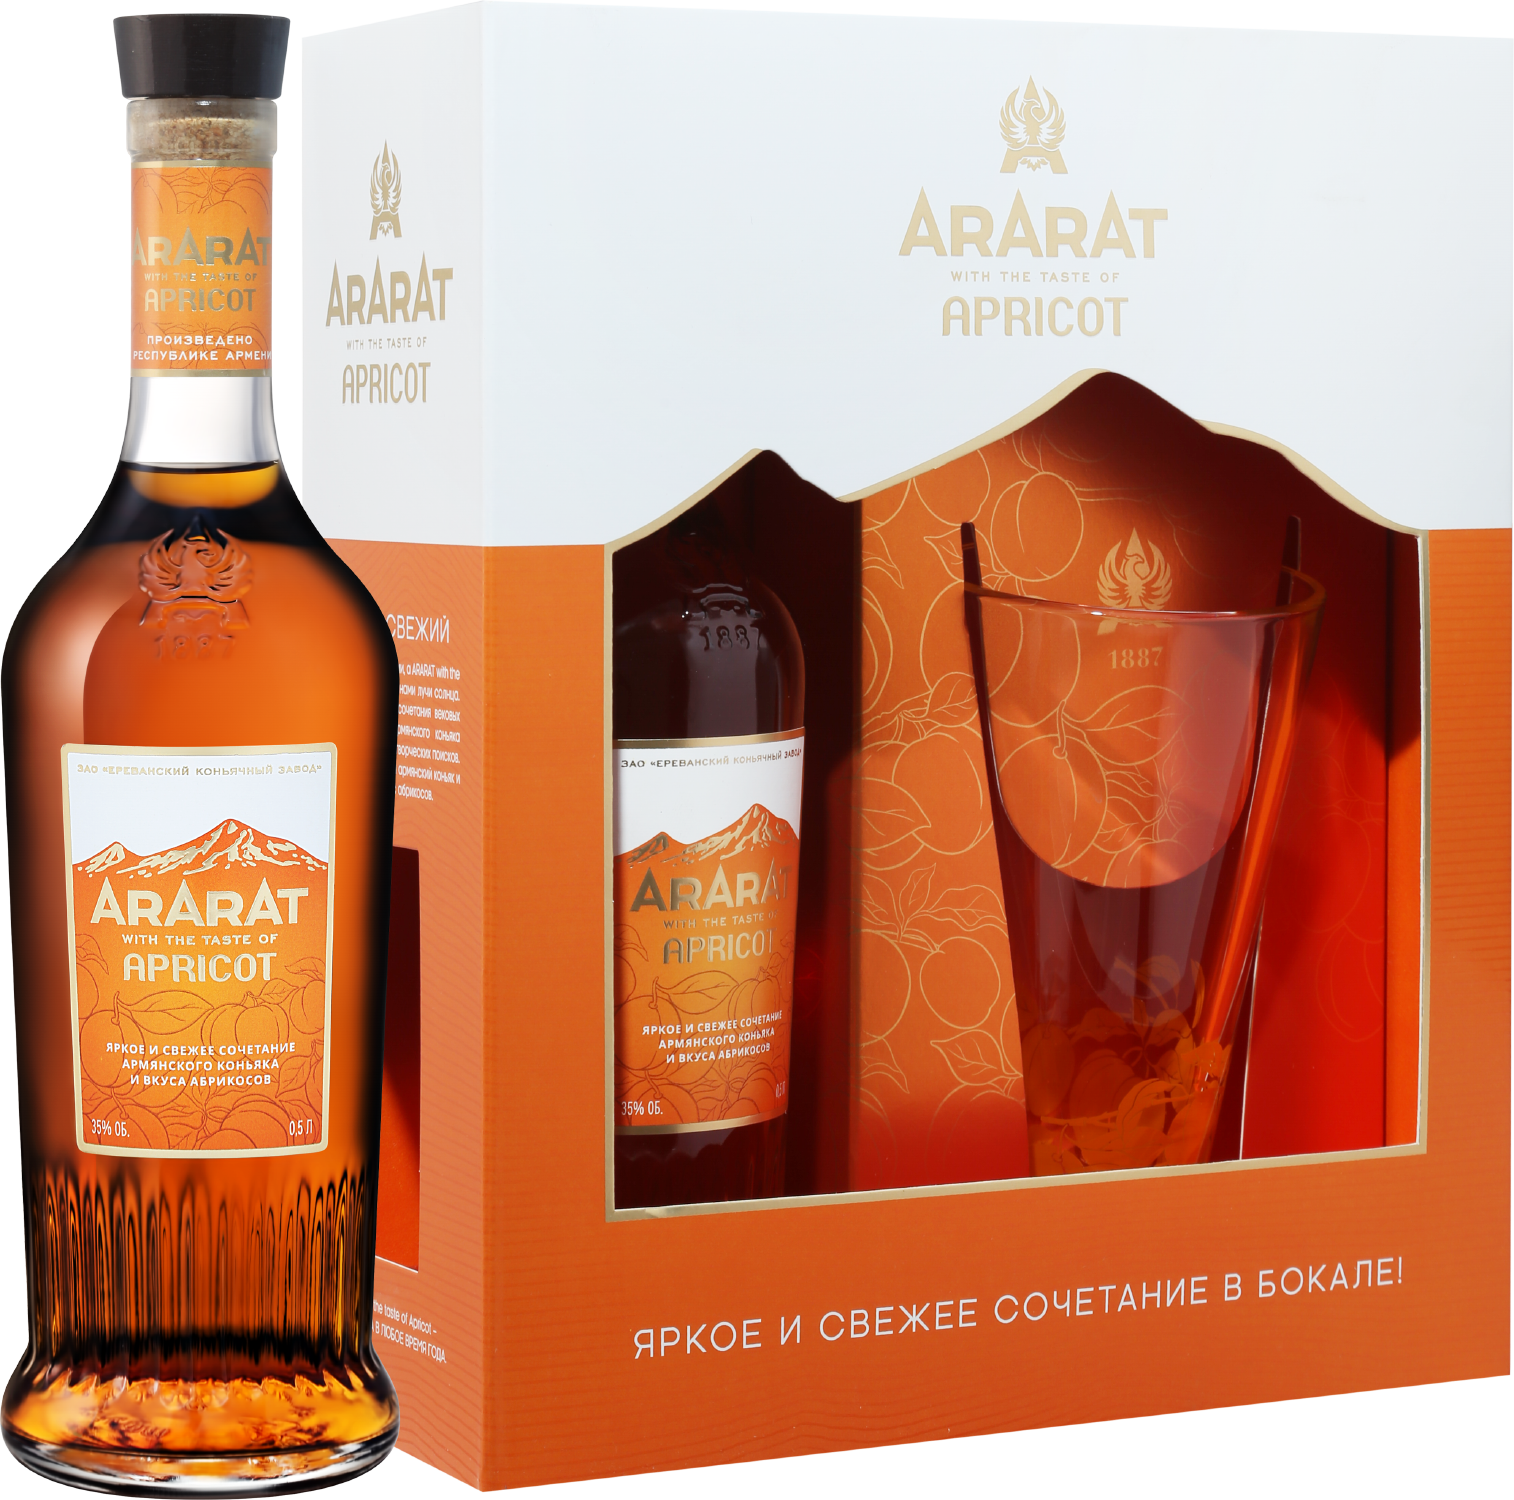 ararat apricot gift box with a glass ARARAT Apricot (gift box with a glass)